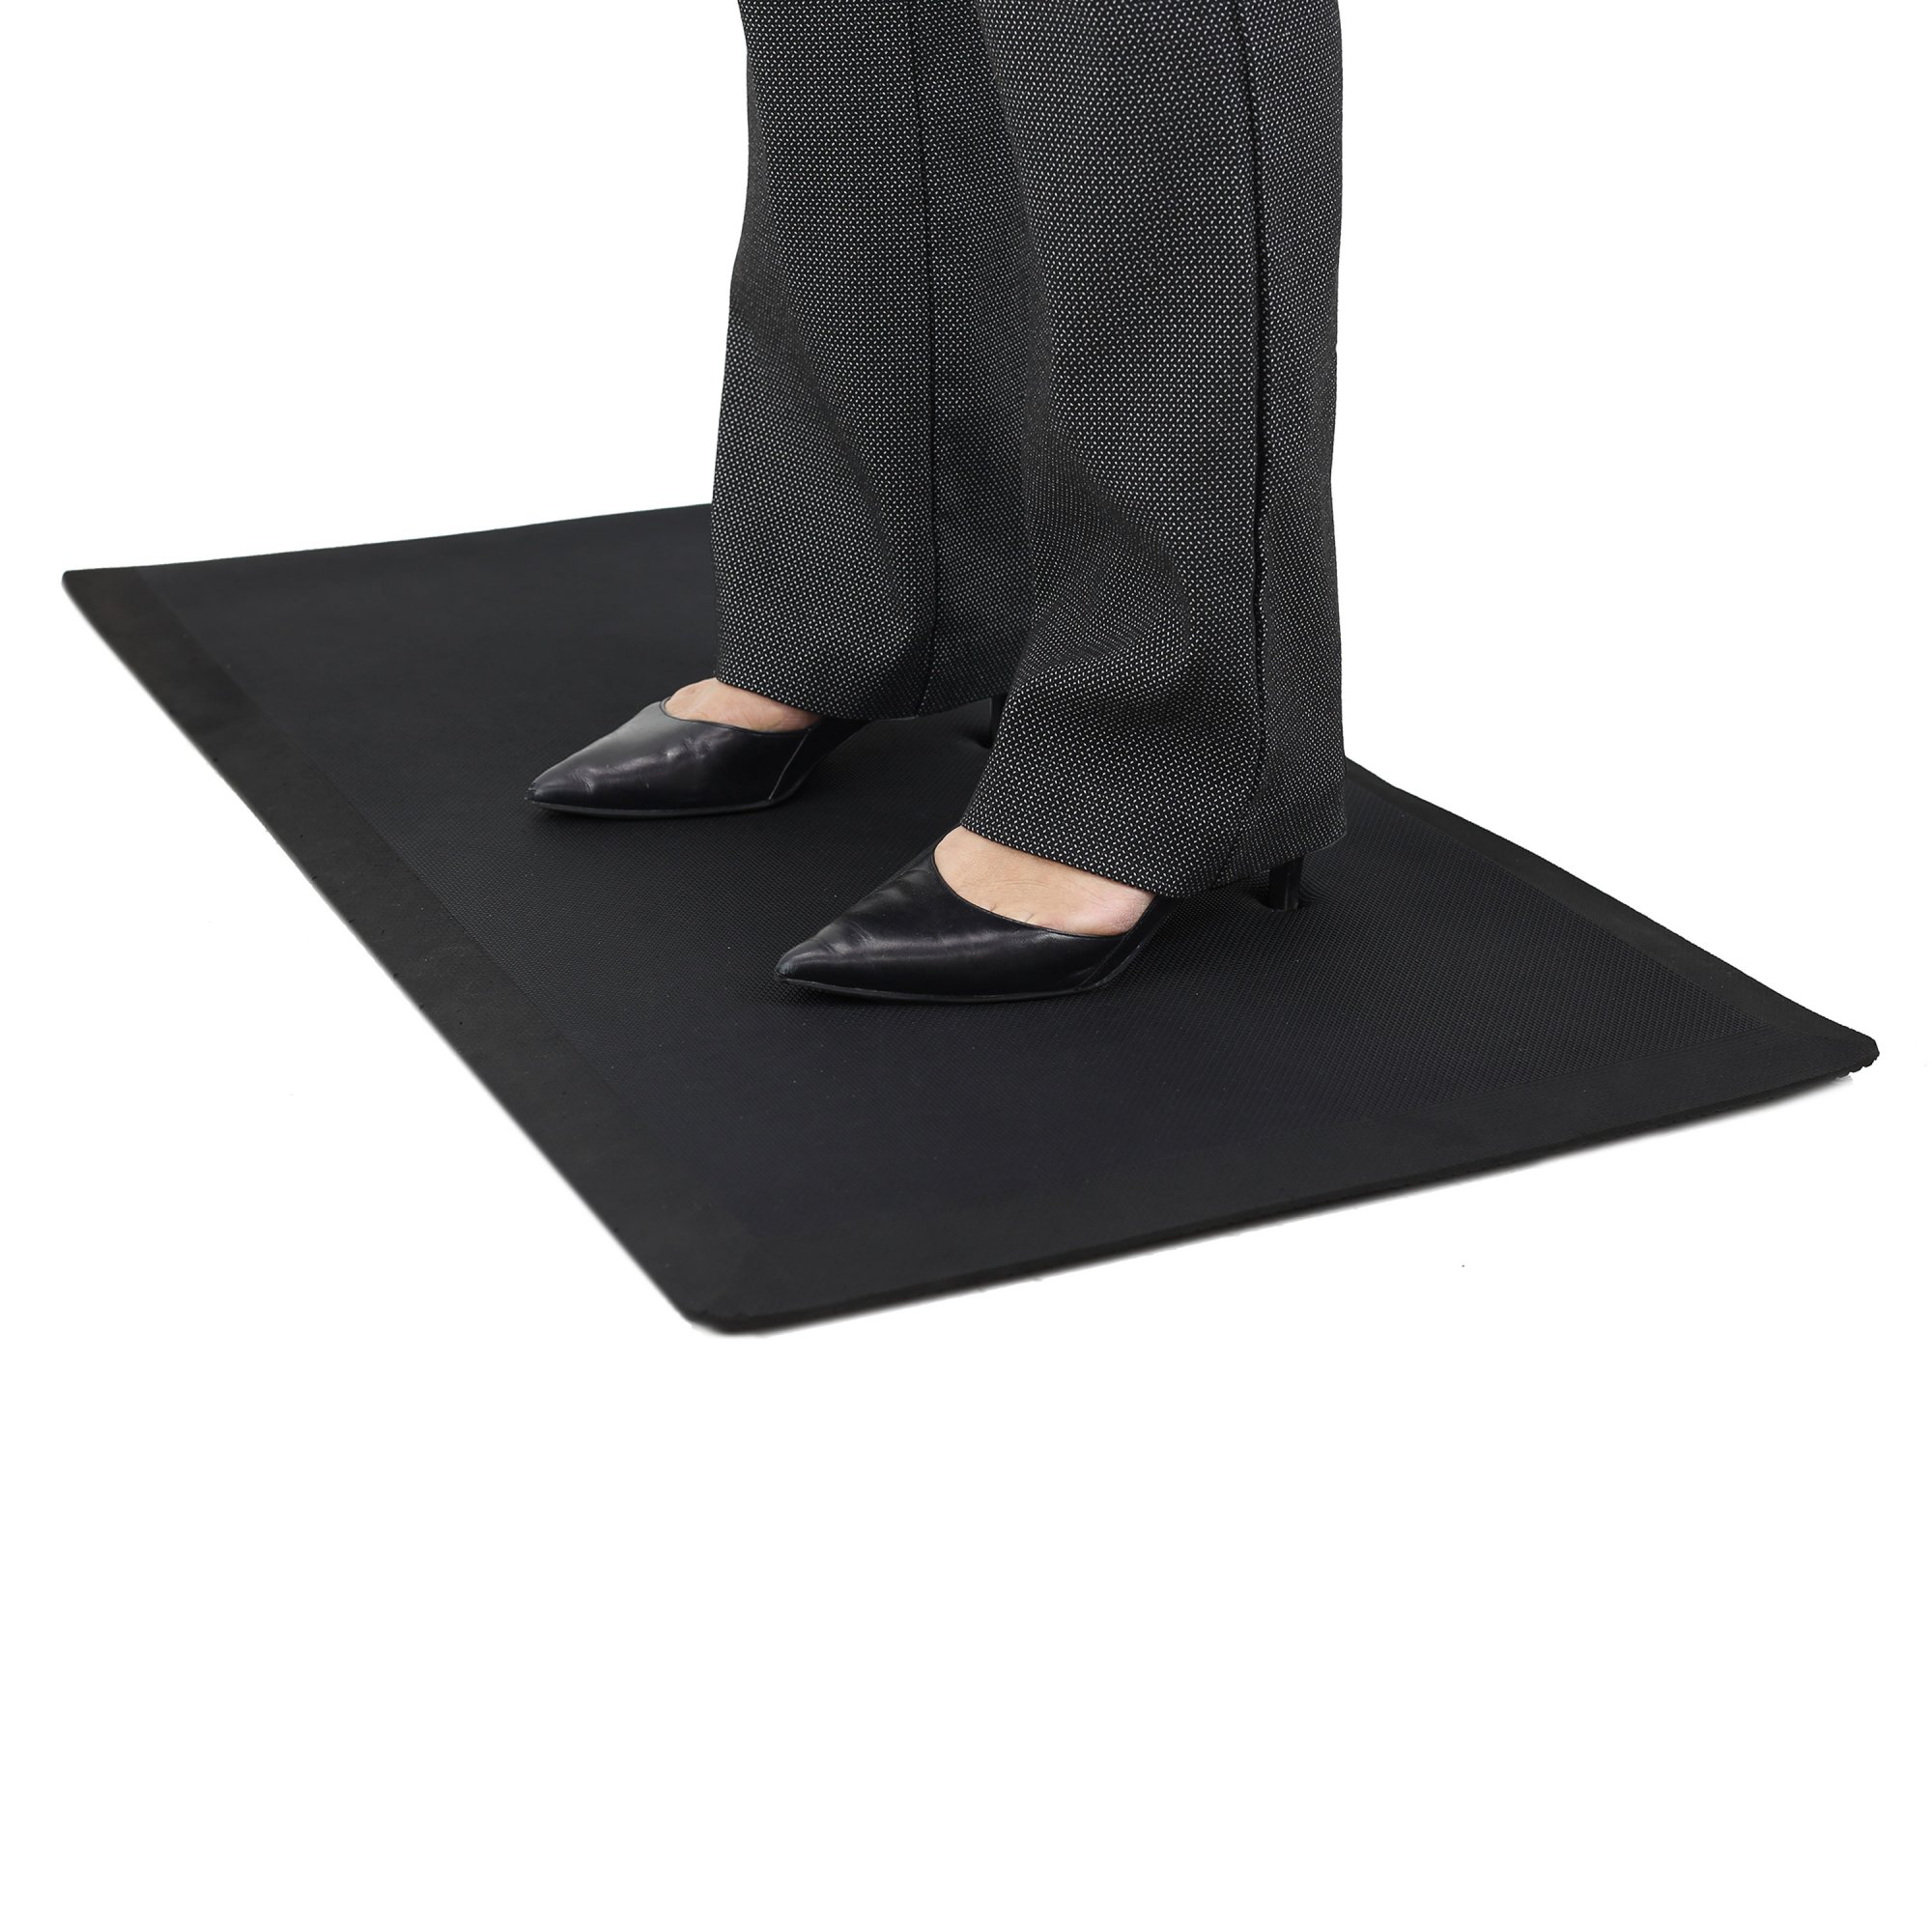 Ergotron 98-076 Neo-Flex Anti-Fatigue Floor Mat